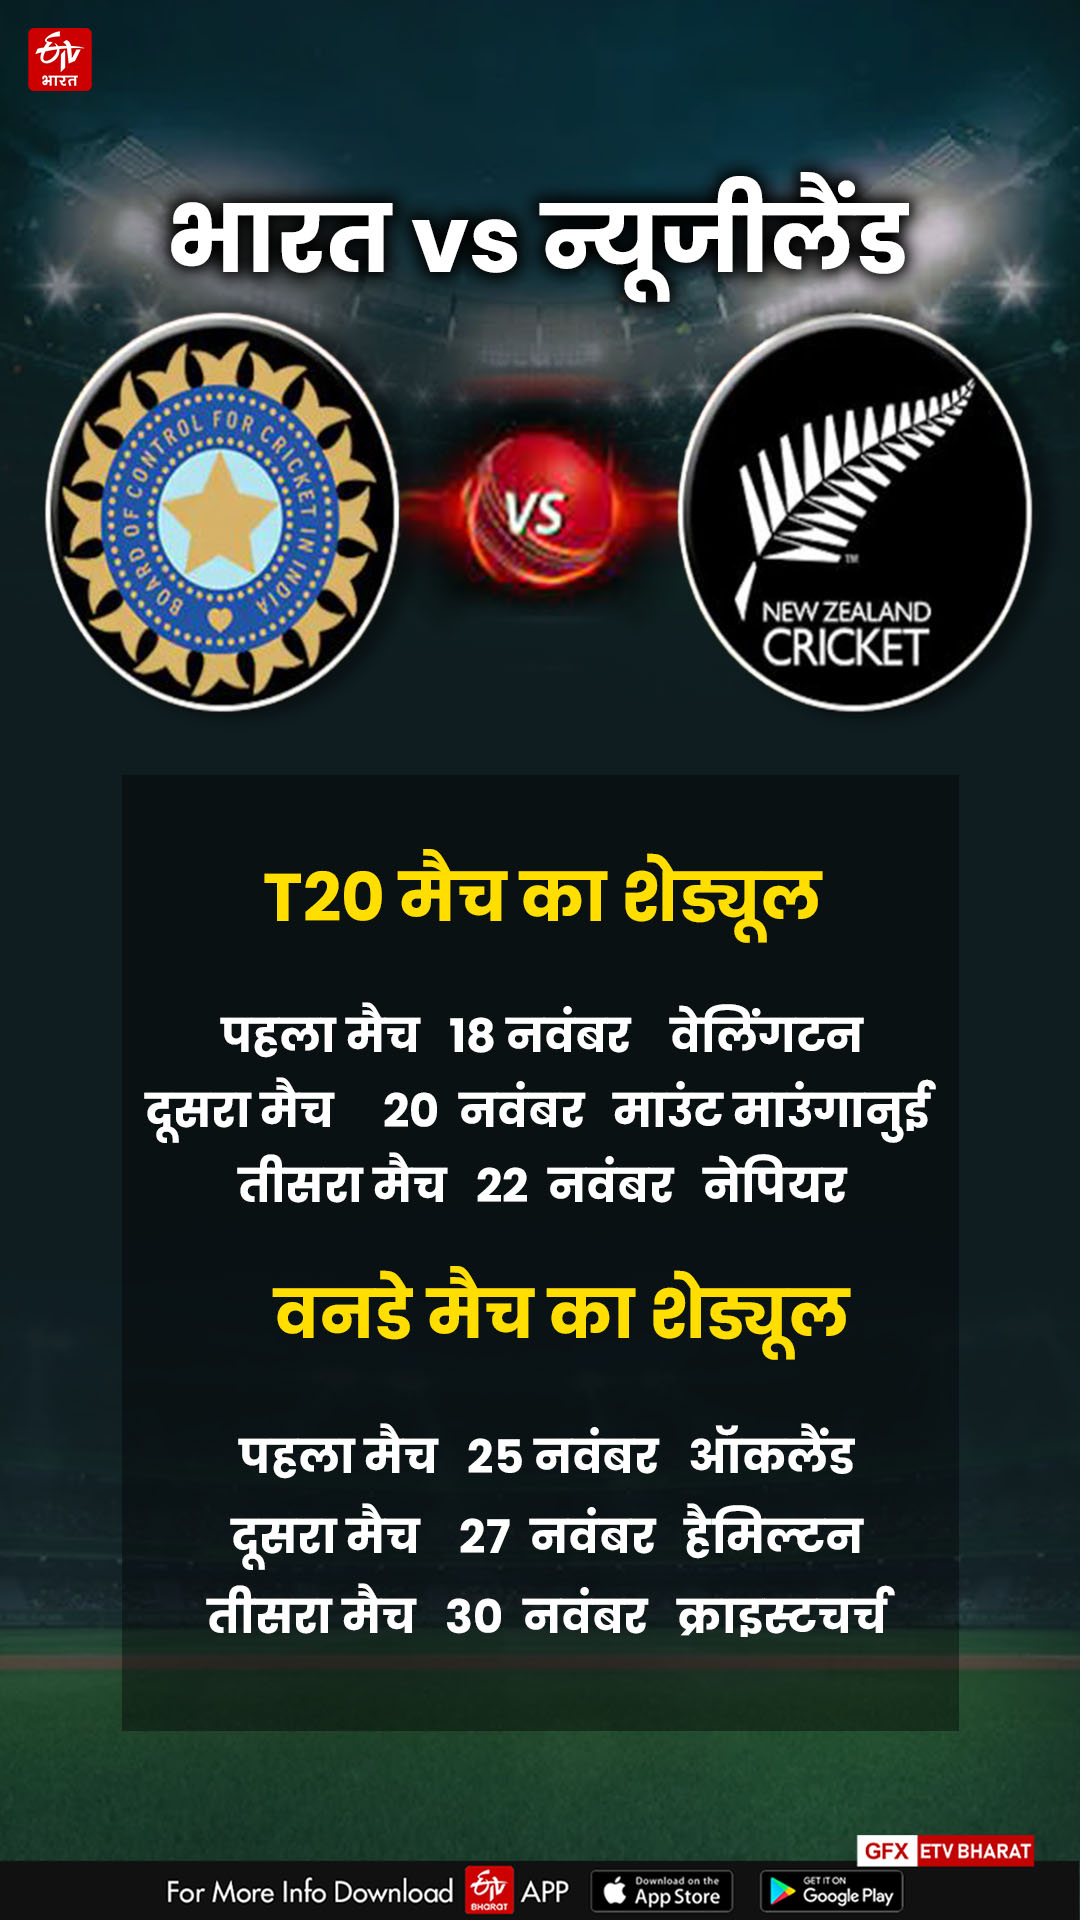 INDIA vs NEW ZEALAND  IND vs NZ  Martin Guptill  Trent Boult  INDIA vs NEW ZEALAND T20 Series  INDIA vs NEW ZEALAND ODI Series  मार्टिन गुप्टिल  ट्रेंट बोल्ट  भारत बनाम न्यूजीलैंड  भारत बनाम न्यूजीलैंड वनडे सीरीज